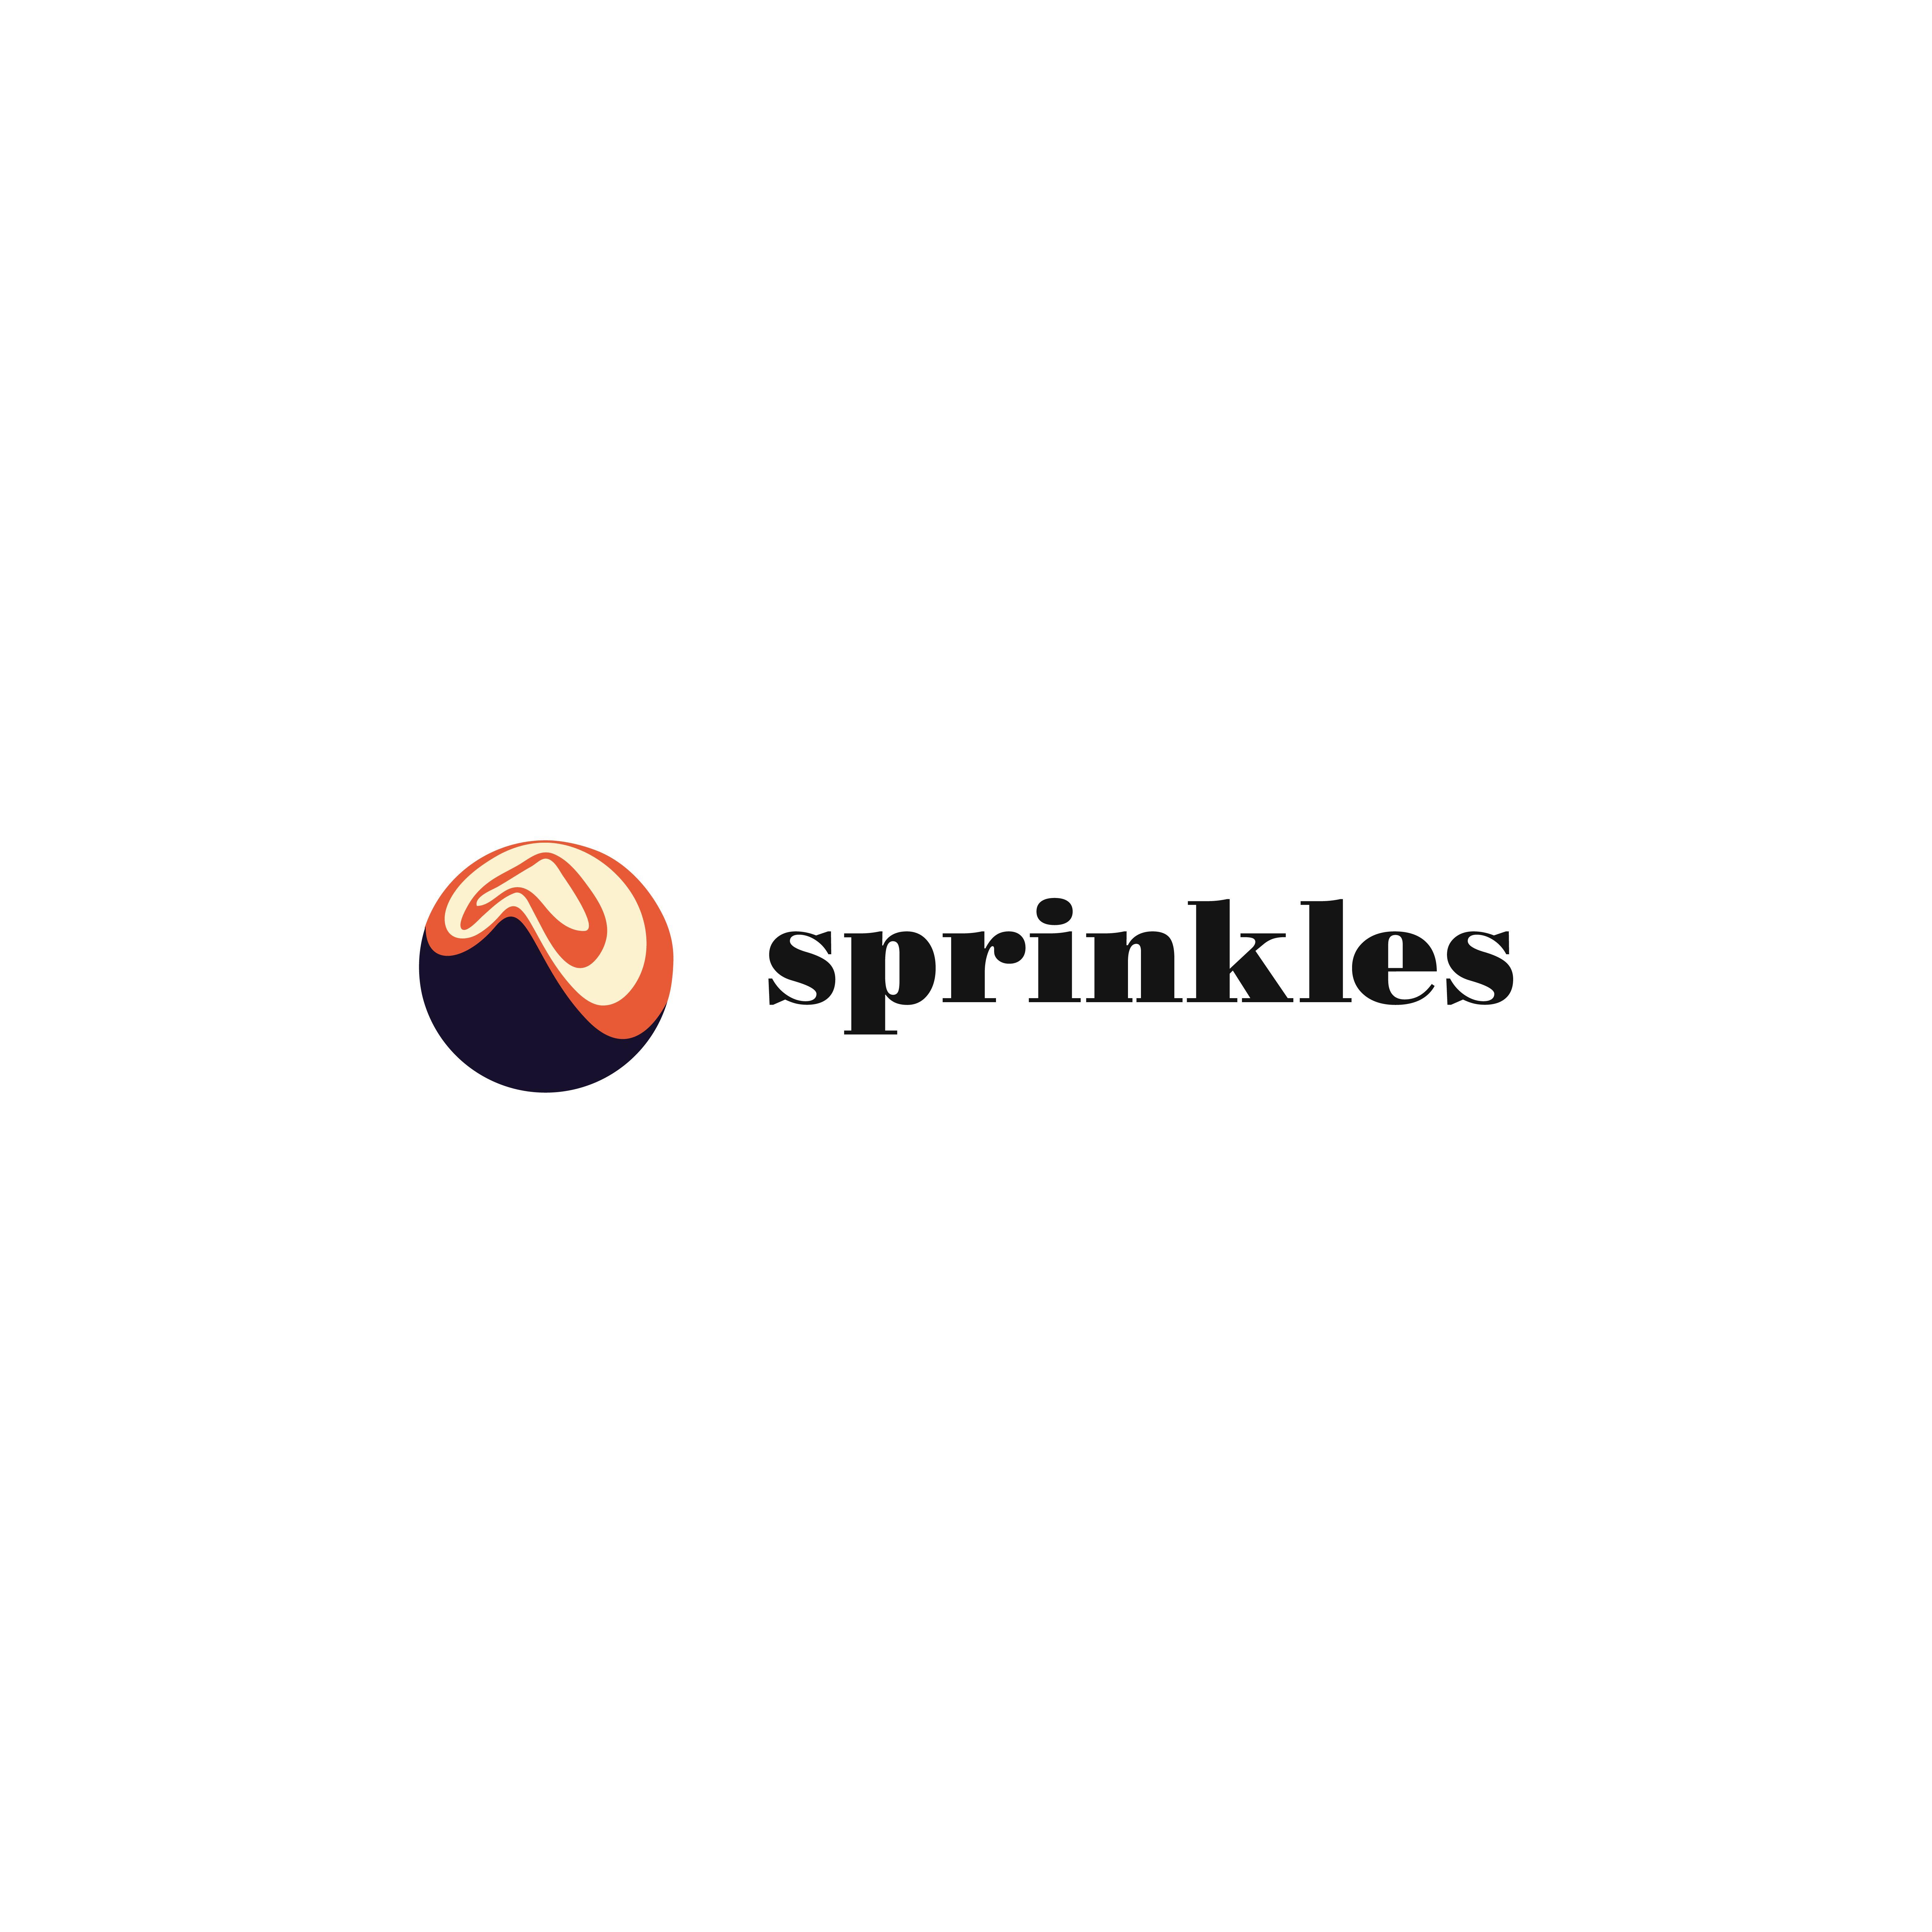 Sprinkles Logo - sprinkles icecream logo thirty logos | thirty logos | Logos, Cool ...